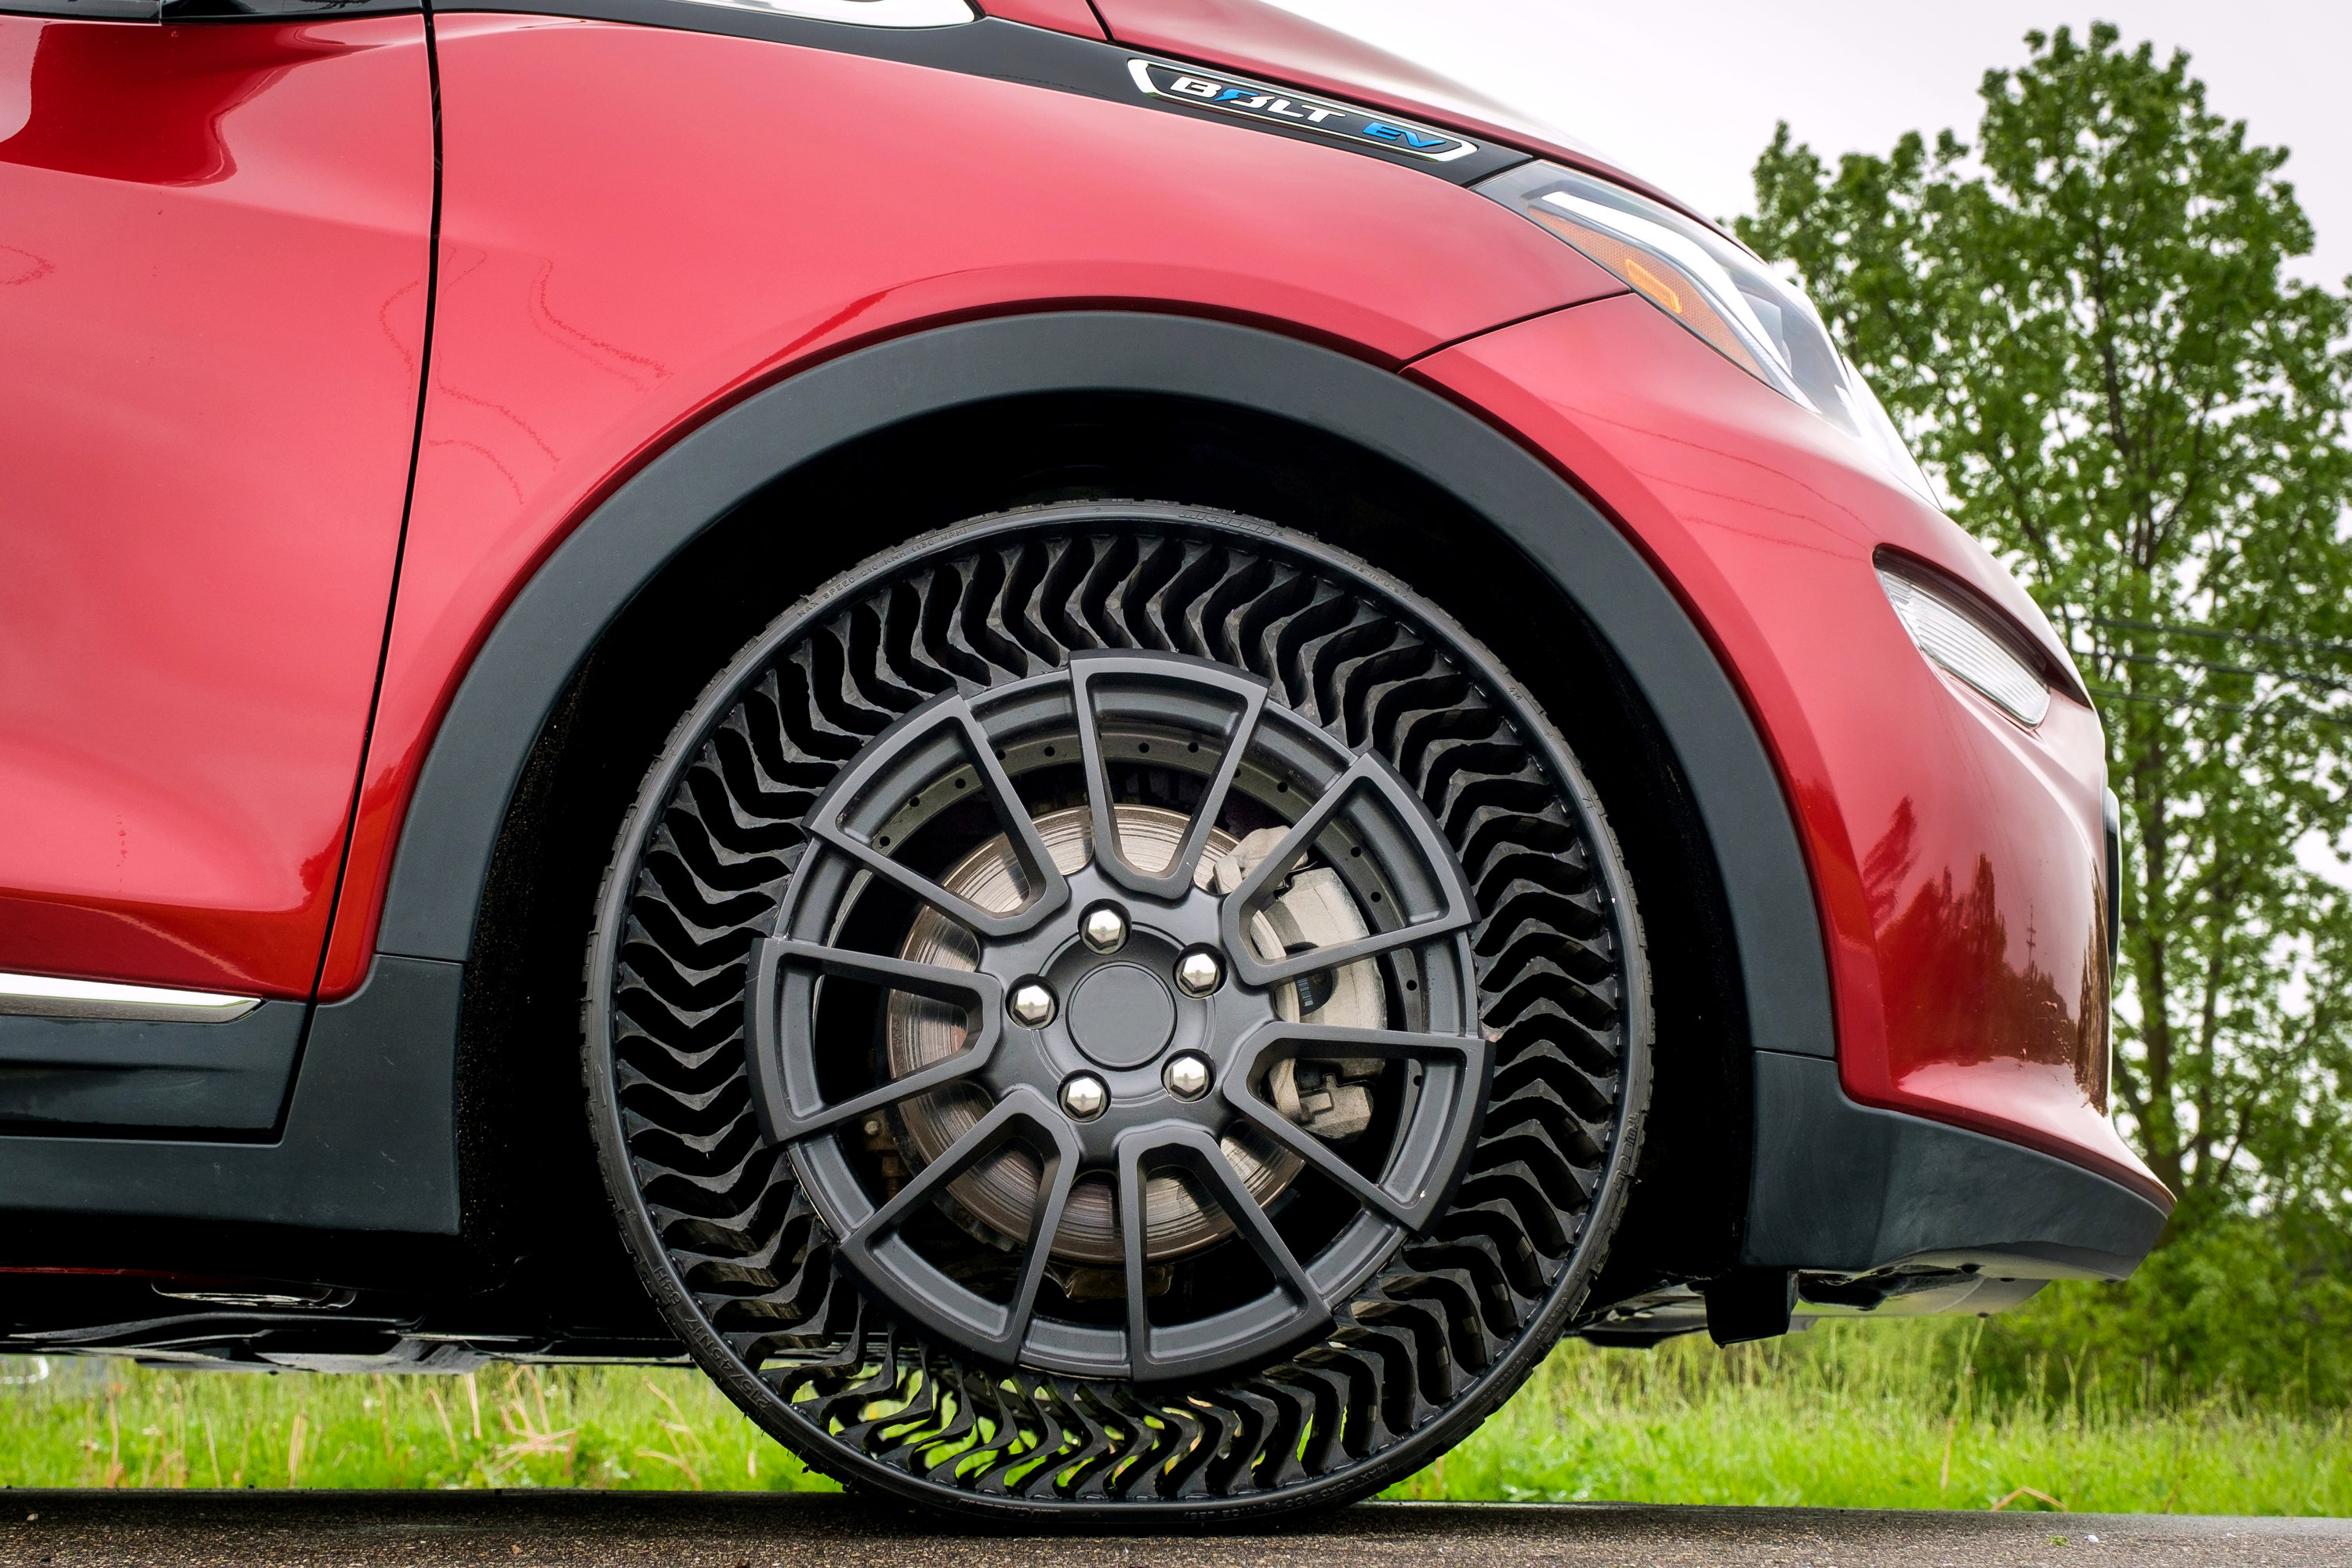 Можно колесо видео. Безвоздушные шины Michelin. Безвоздушные шины Michelin Tweel. Безвоздушная резина Мишлен. 1) Michelin-Tweel безвоздушные шины.